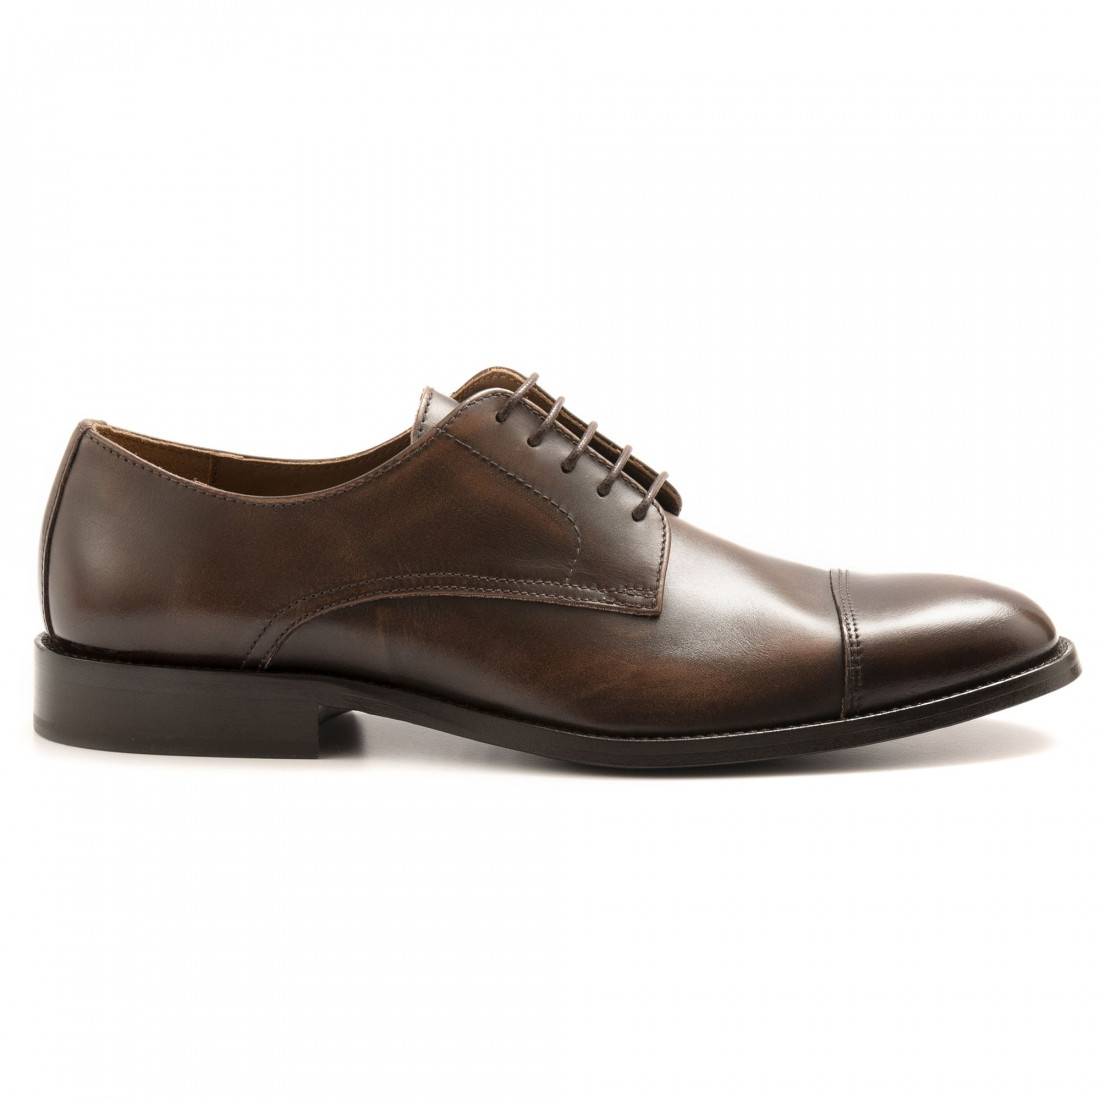 Slordig landbouw Heel veel goeds Men's Marco Ferretti derby shoes in brown leather